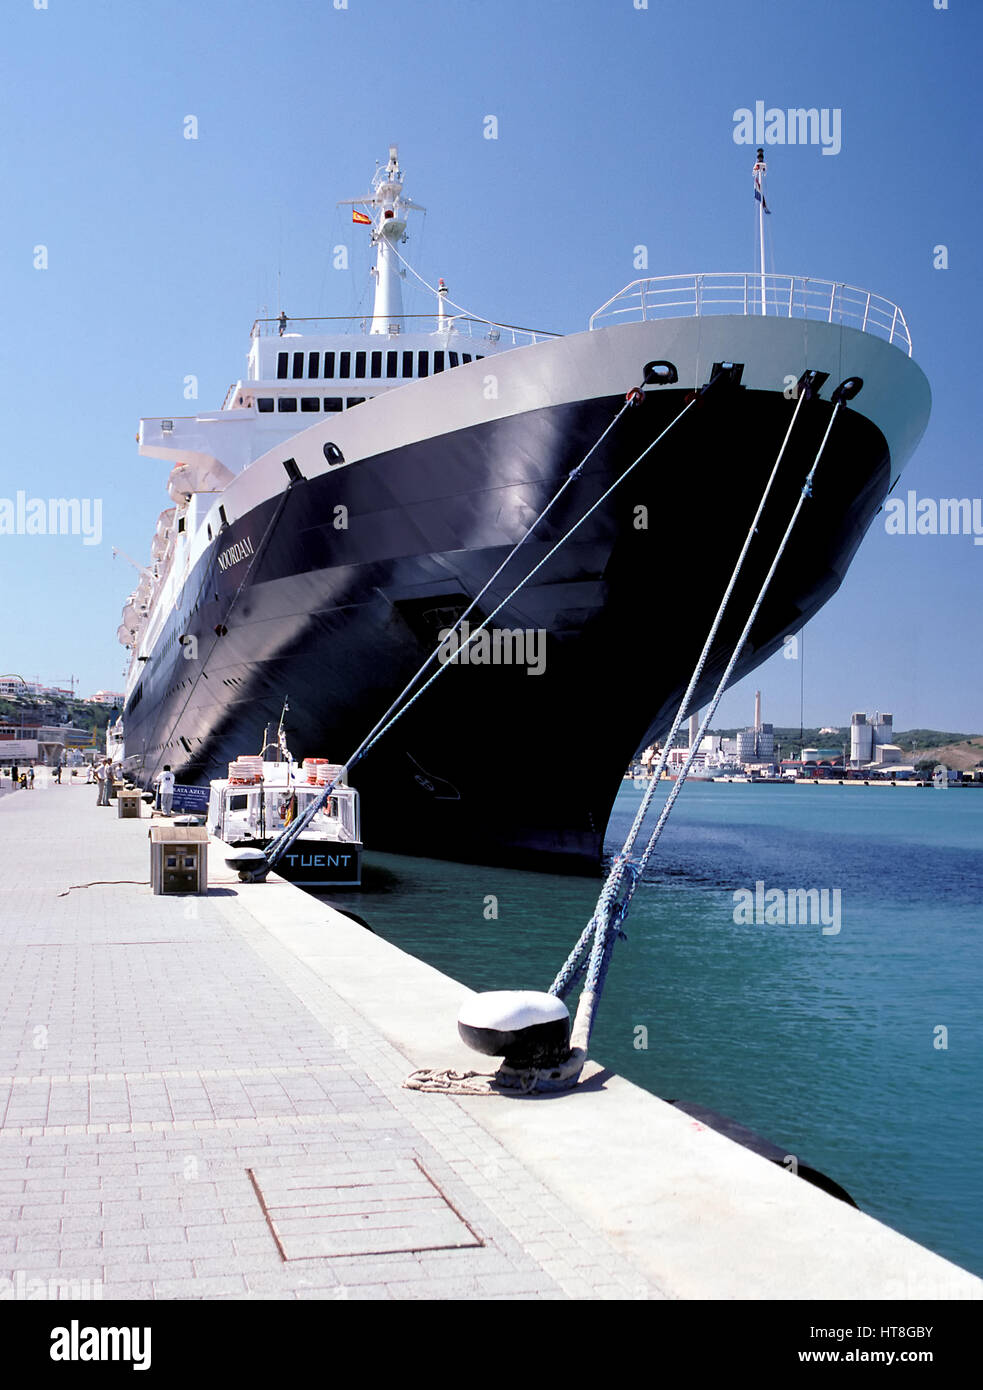 Cruise Ship 'Noordam' in the Port de Mao on The island of Menorca, Spain Stock Photo